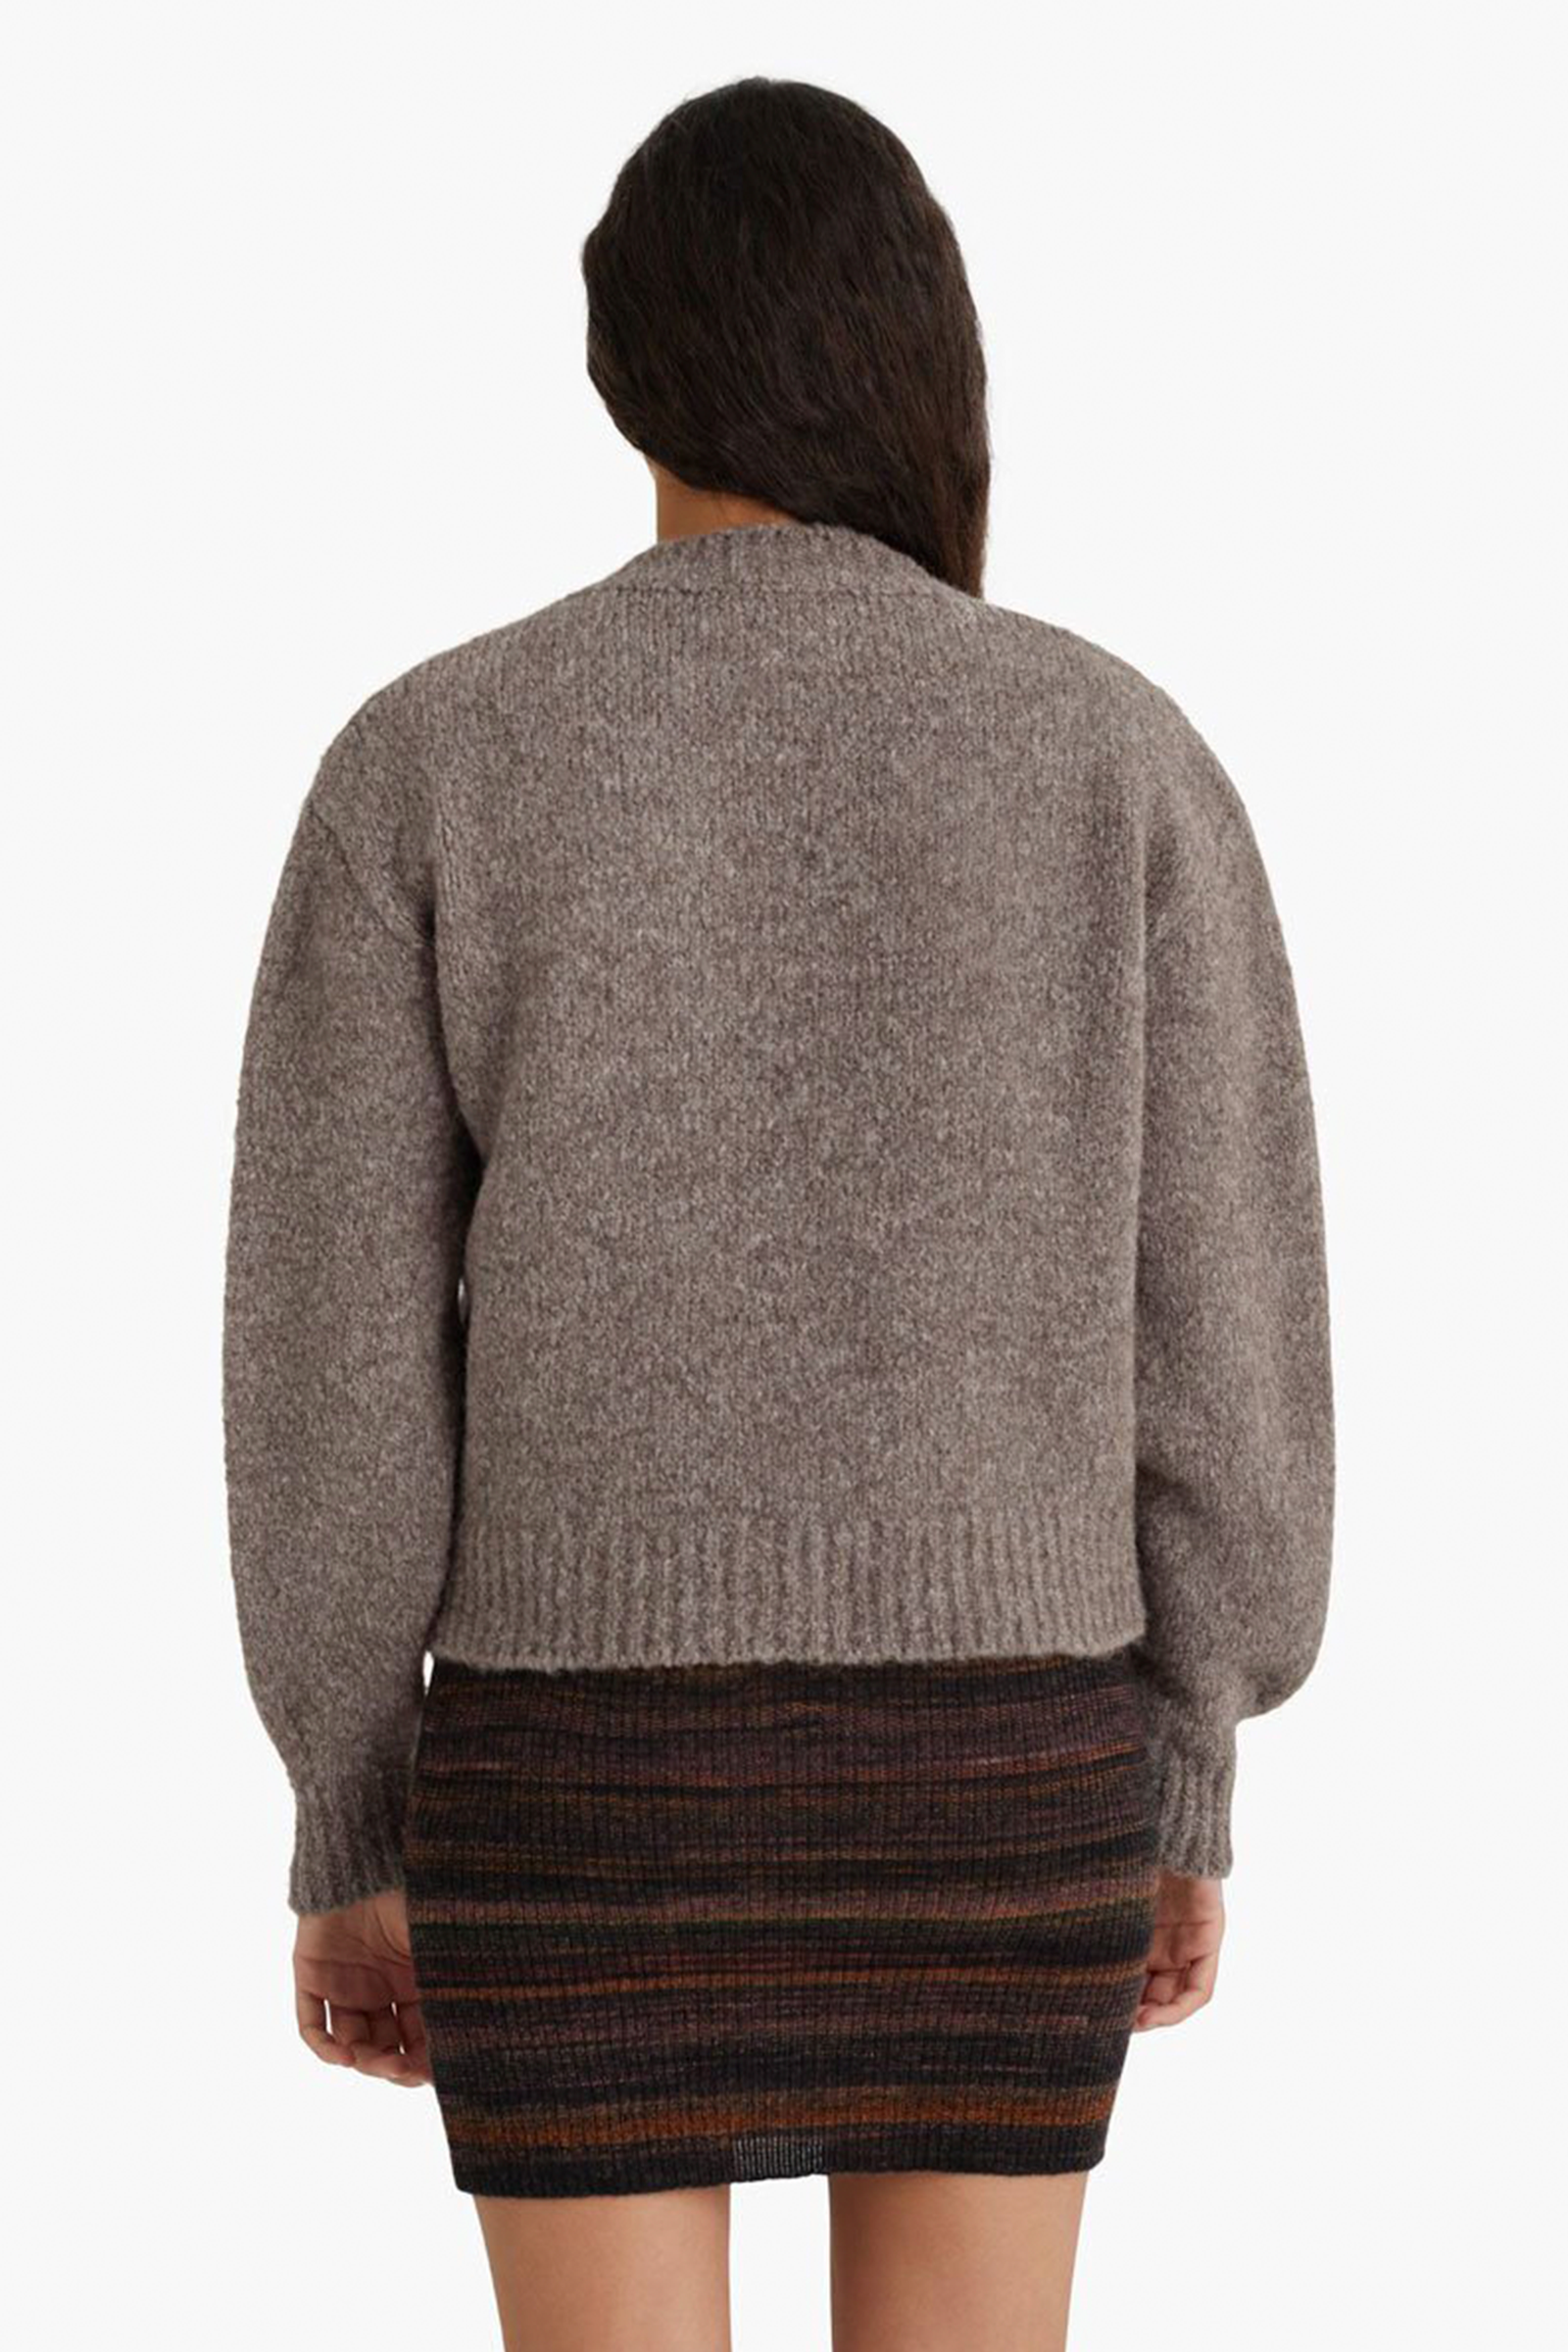 Paloma Wool Wink Anita Sweater in Mid Grey